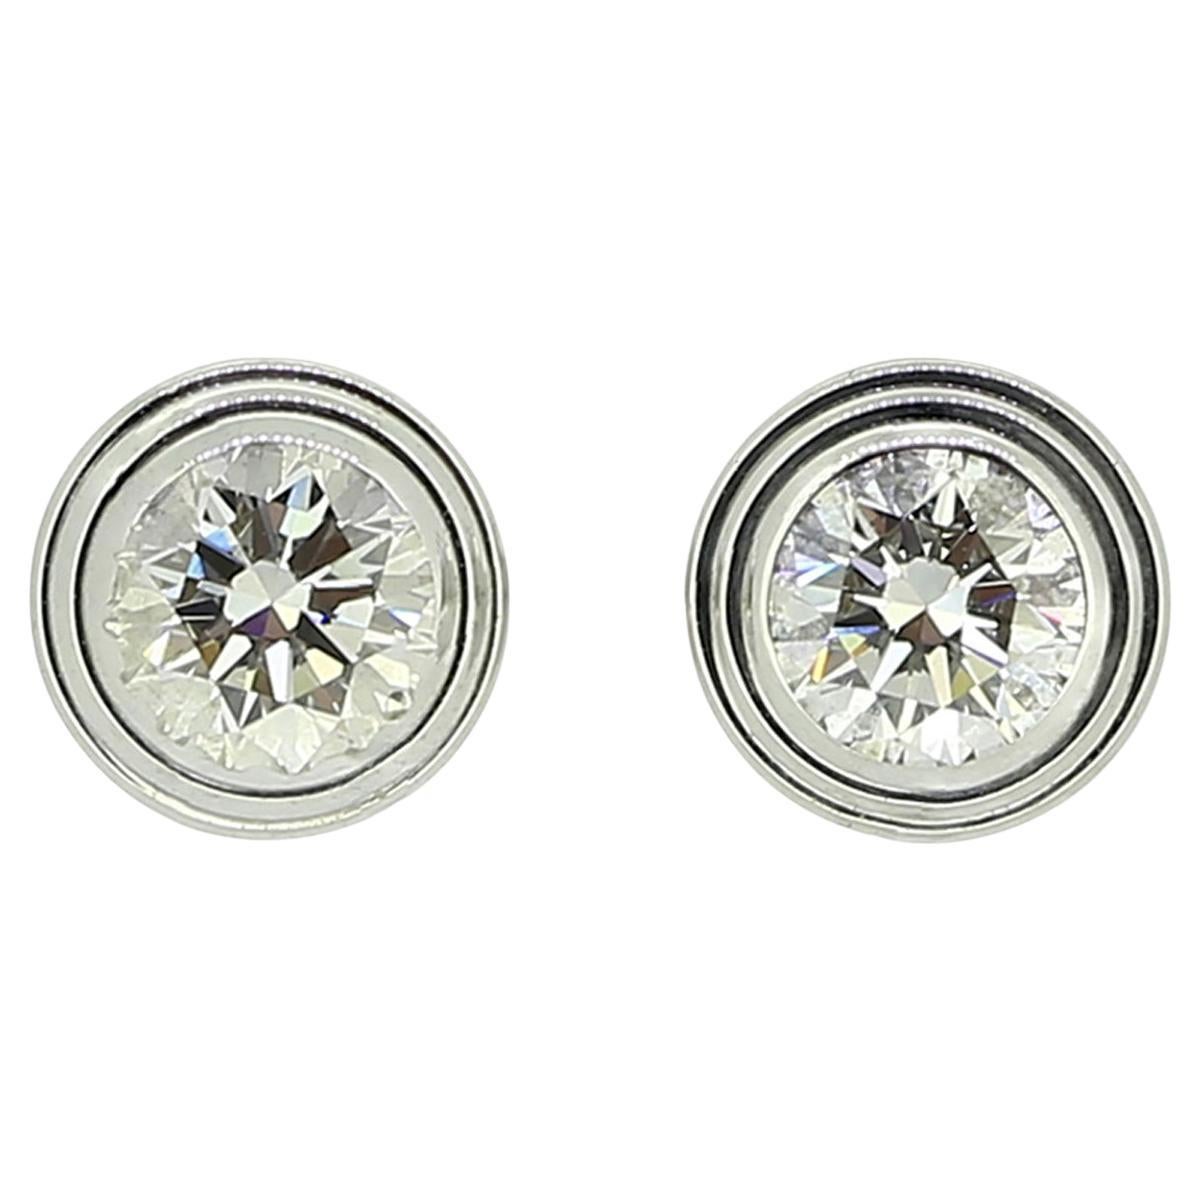 Cartier d'Amour Diamond Stud Earrings